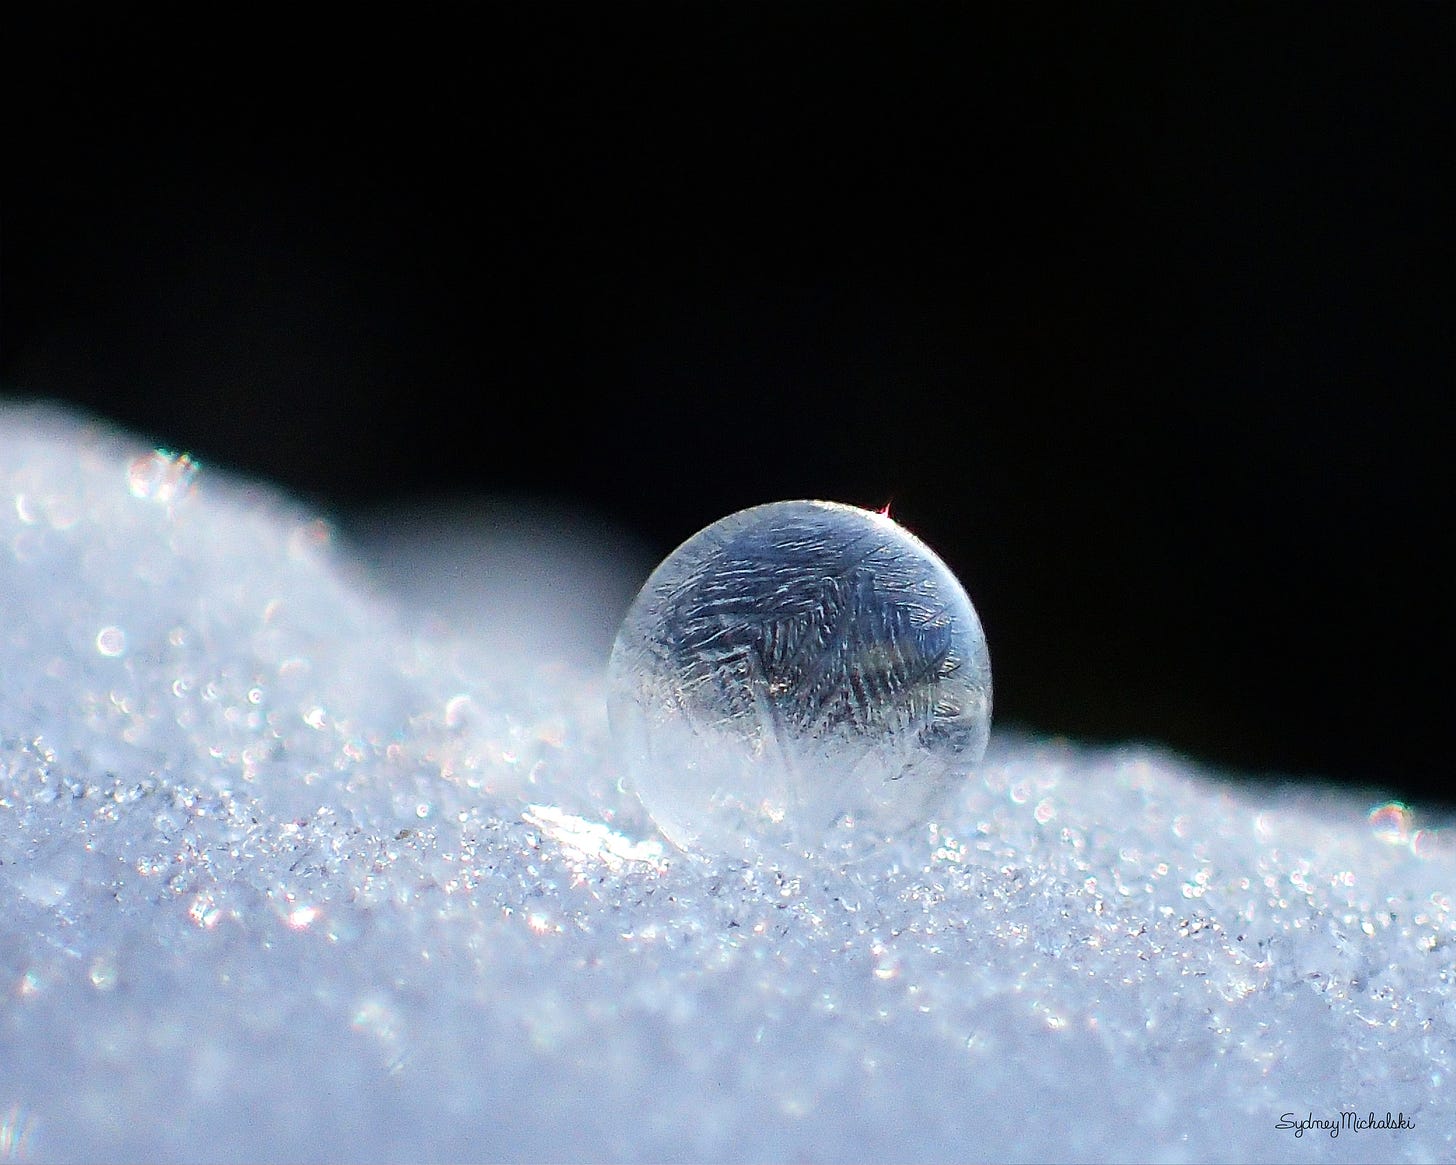 A single frozen sunlit bubble rests on a bank of snow.